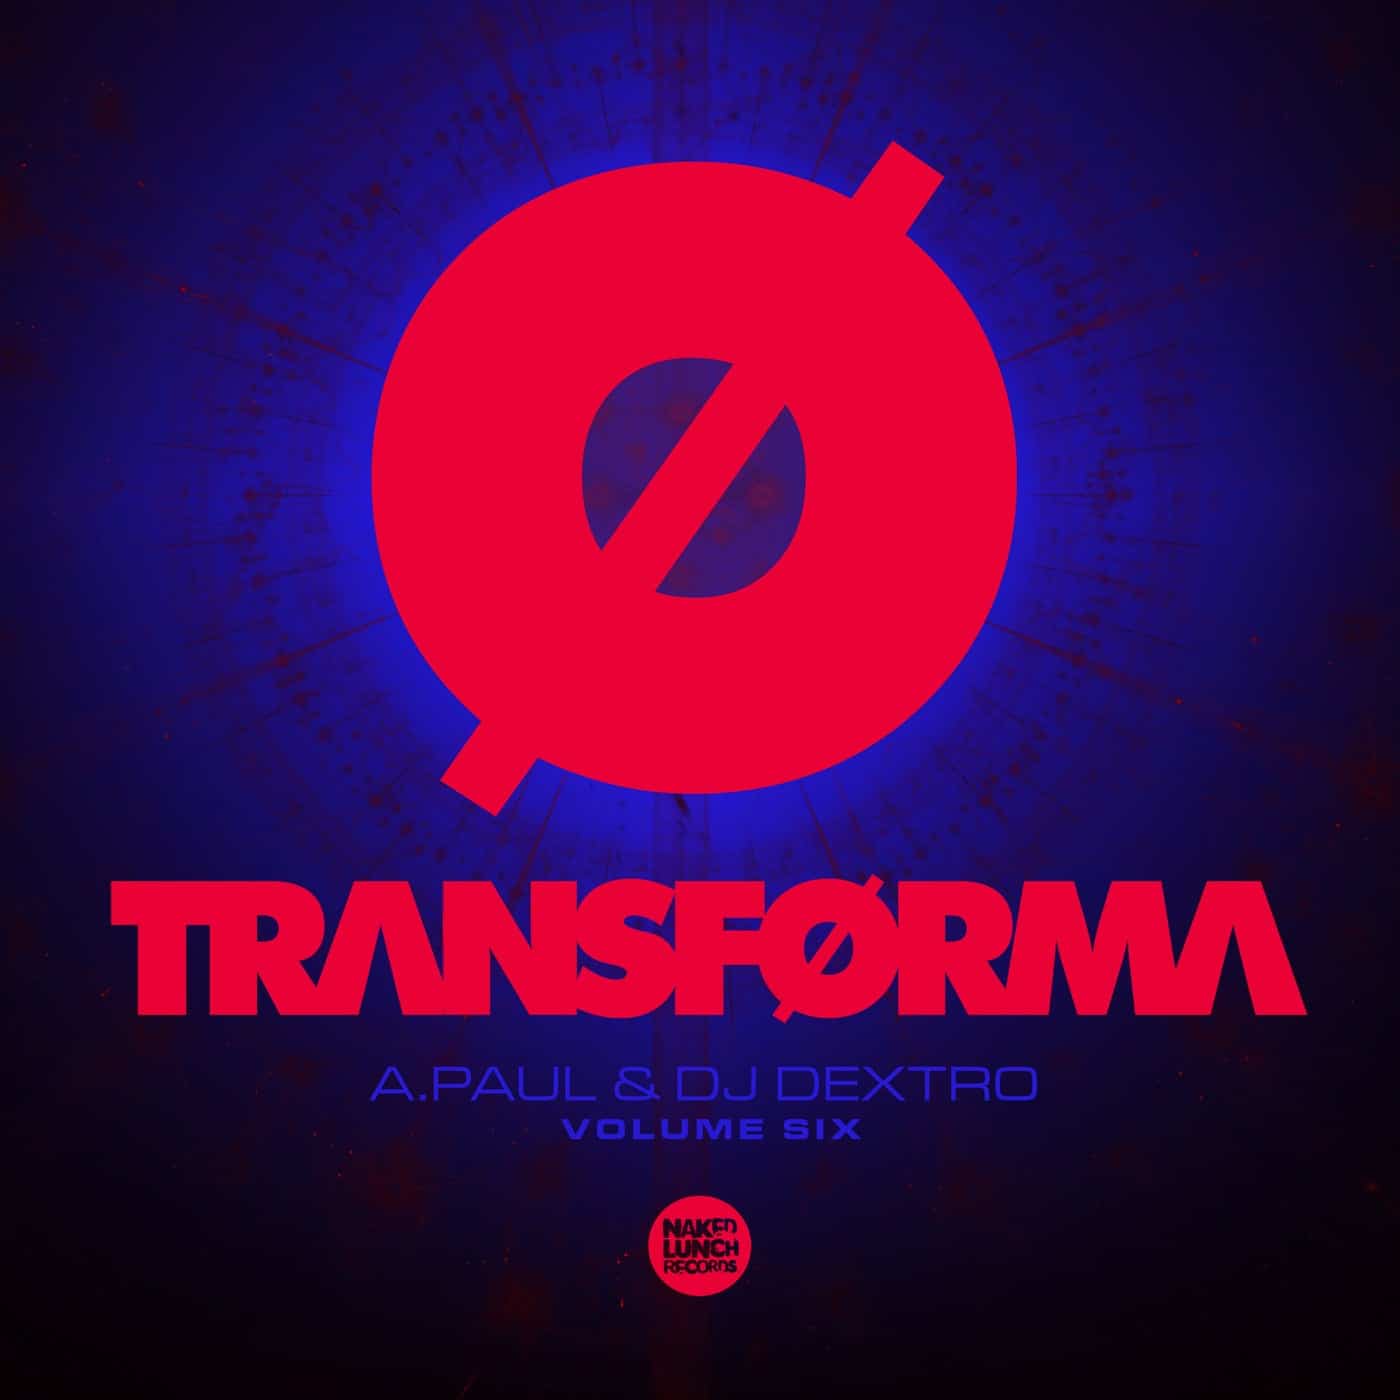 image cover: A.Paul, DJ Dextro - TRANSFORMA Volume Six / NLLPD102